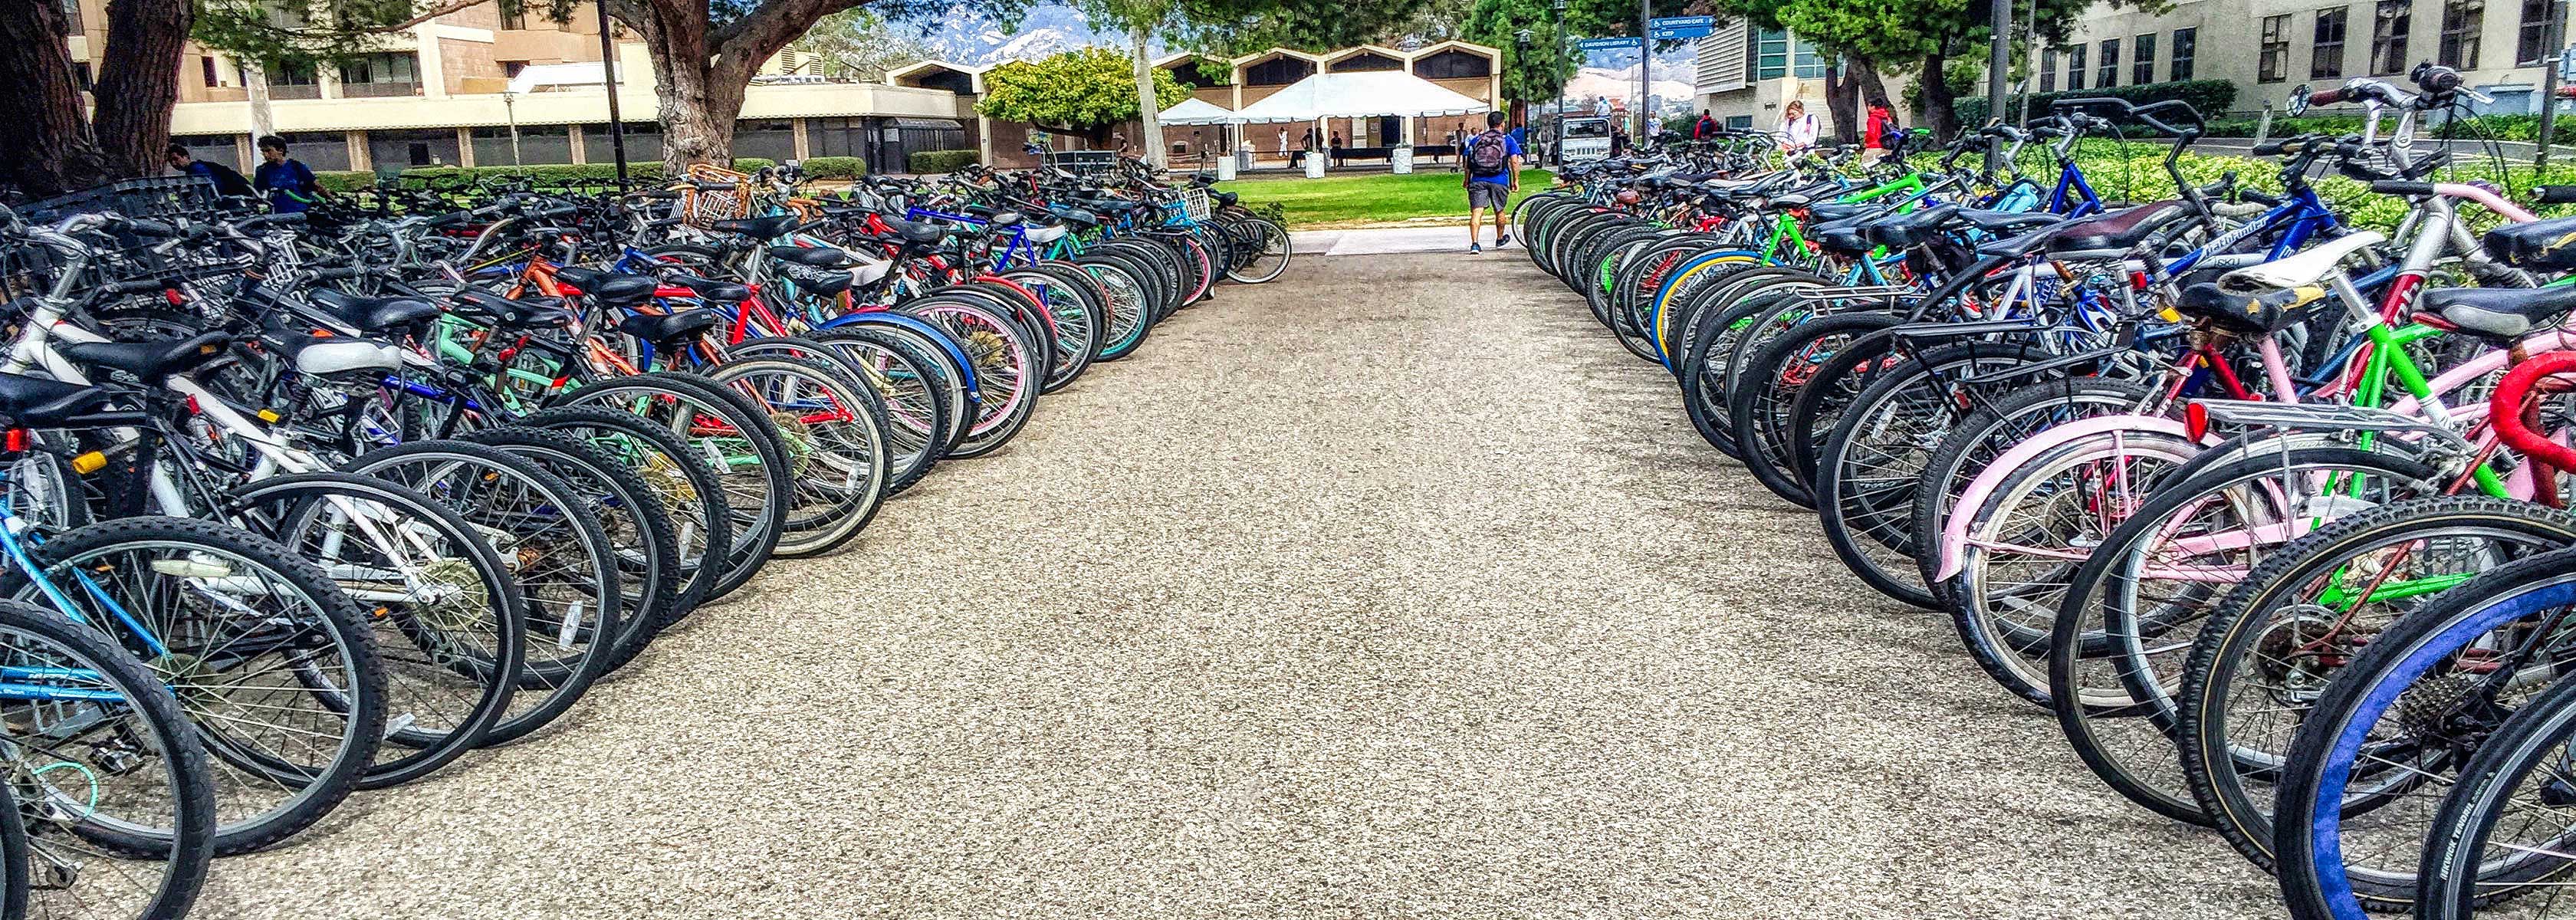 Full Campus Bike Racks